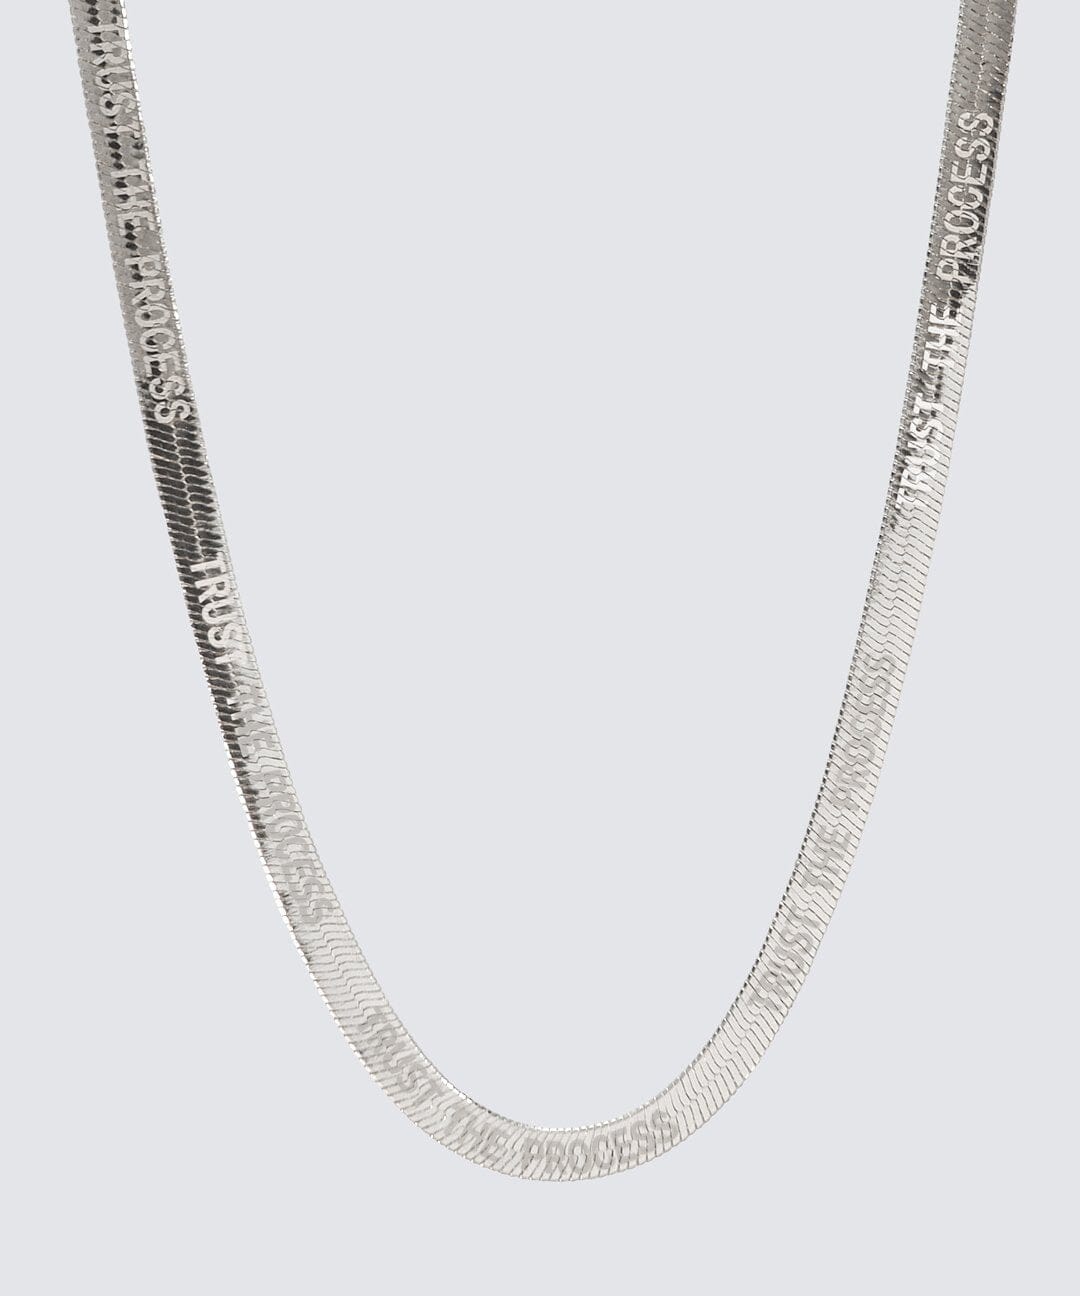 Silver Herringbone Necklace Necklaces Borun Silver TRUST THE PROCESS 